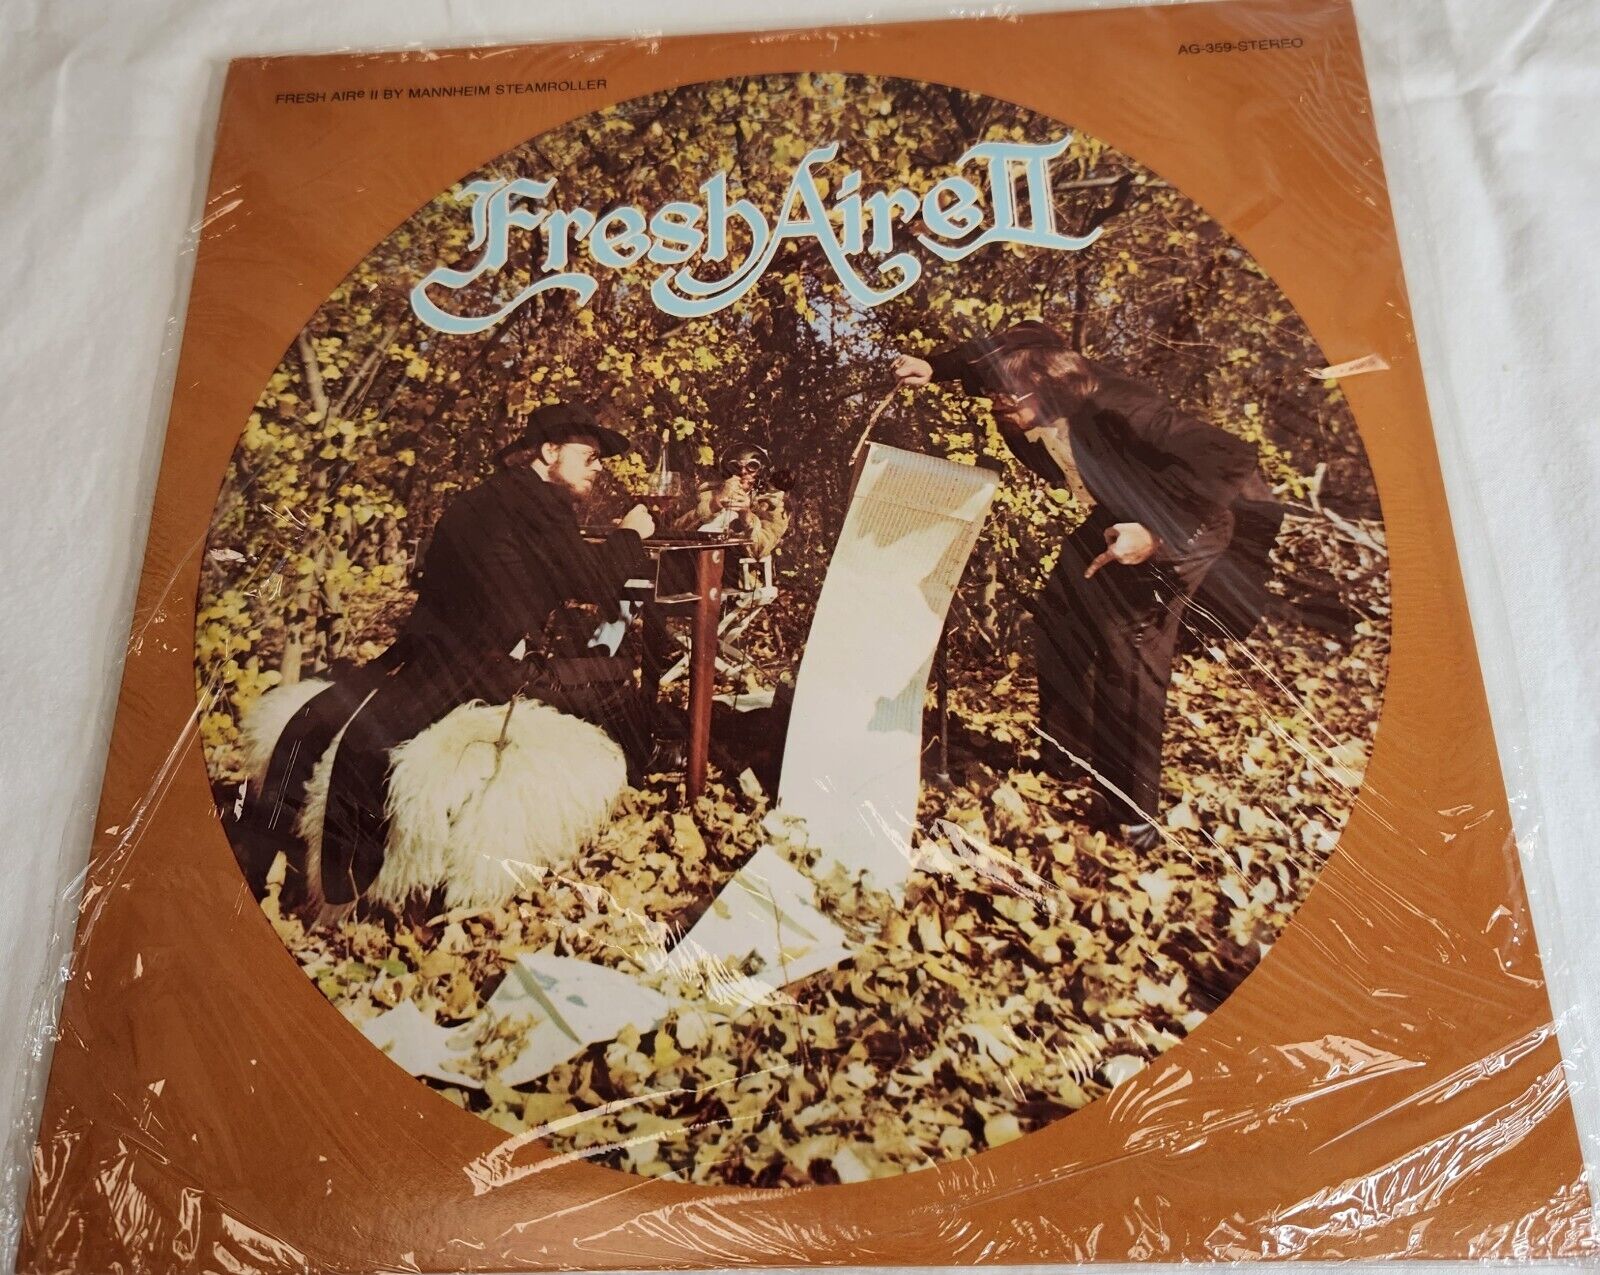 Fresh Aire II - Mannheim Steamroller, Sealed Vinyl LP, AG-359 Stereo